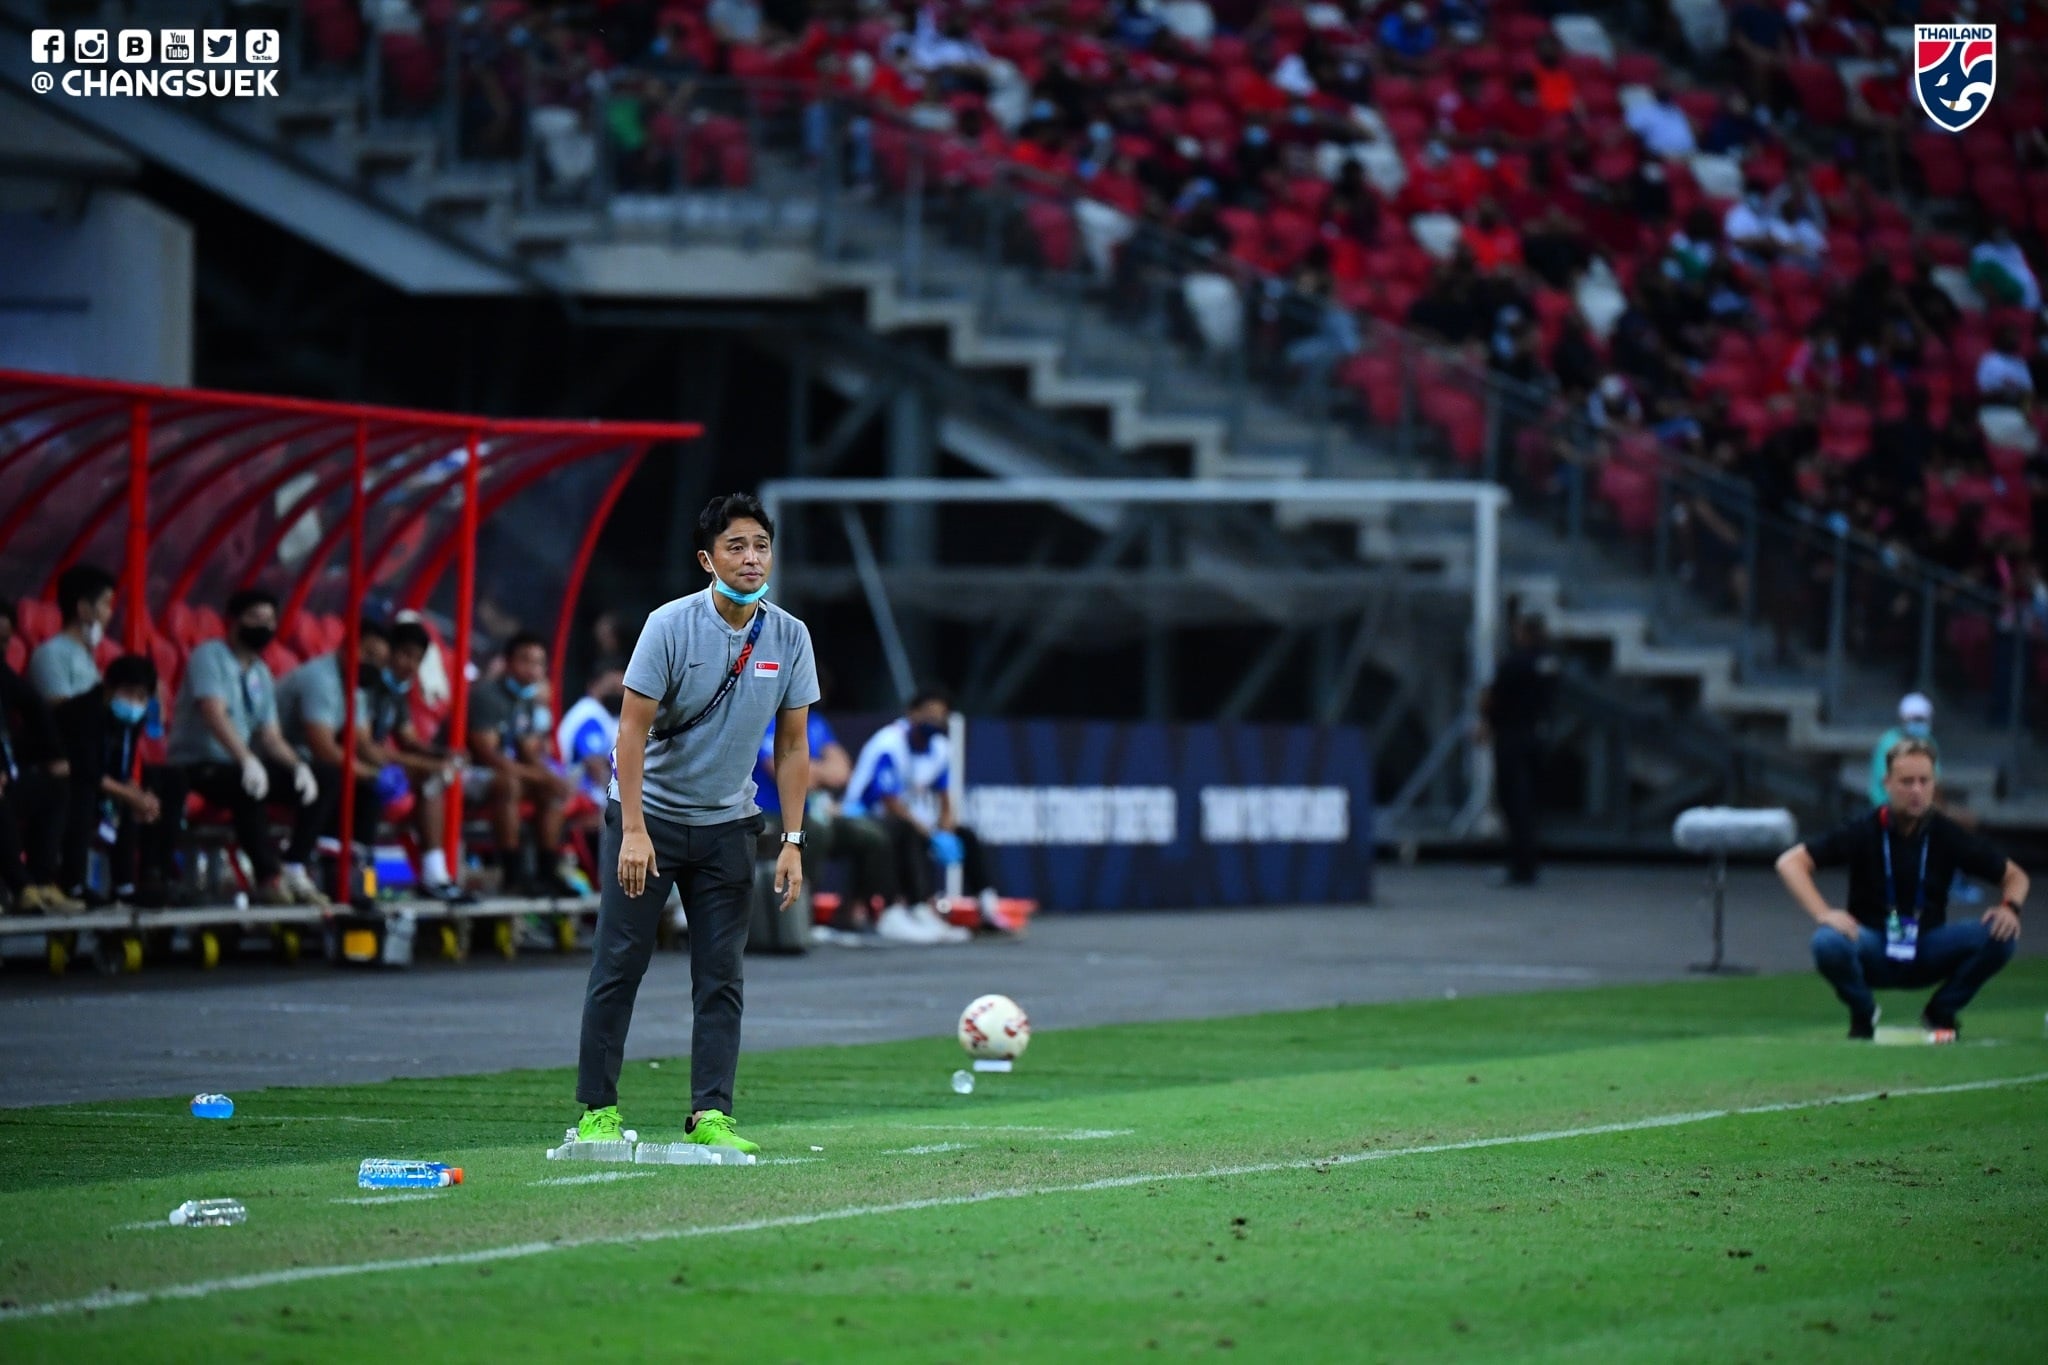 Piala AFF 2020: Pelatih Timnas Singapura Waspadai Gaya Bermain Timnas Indonesia